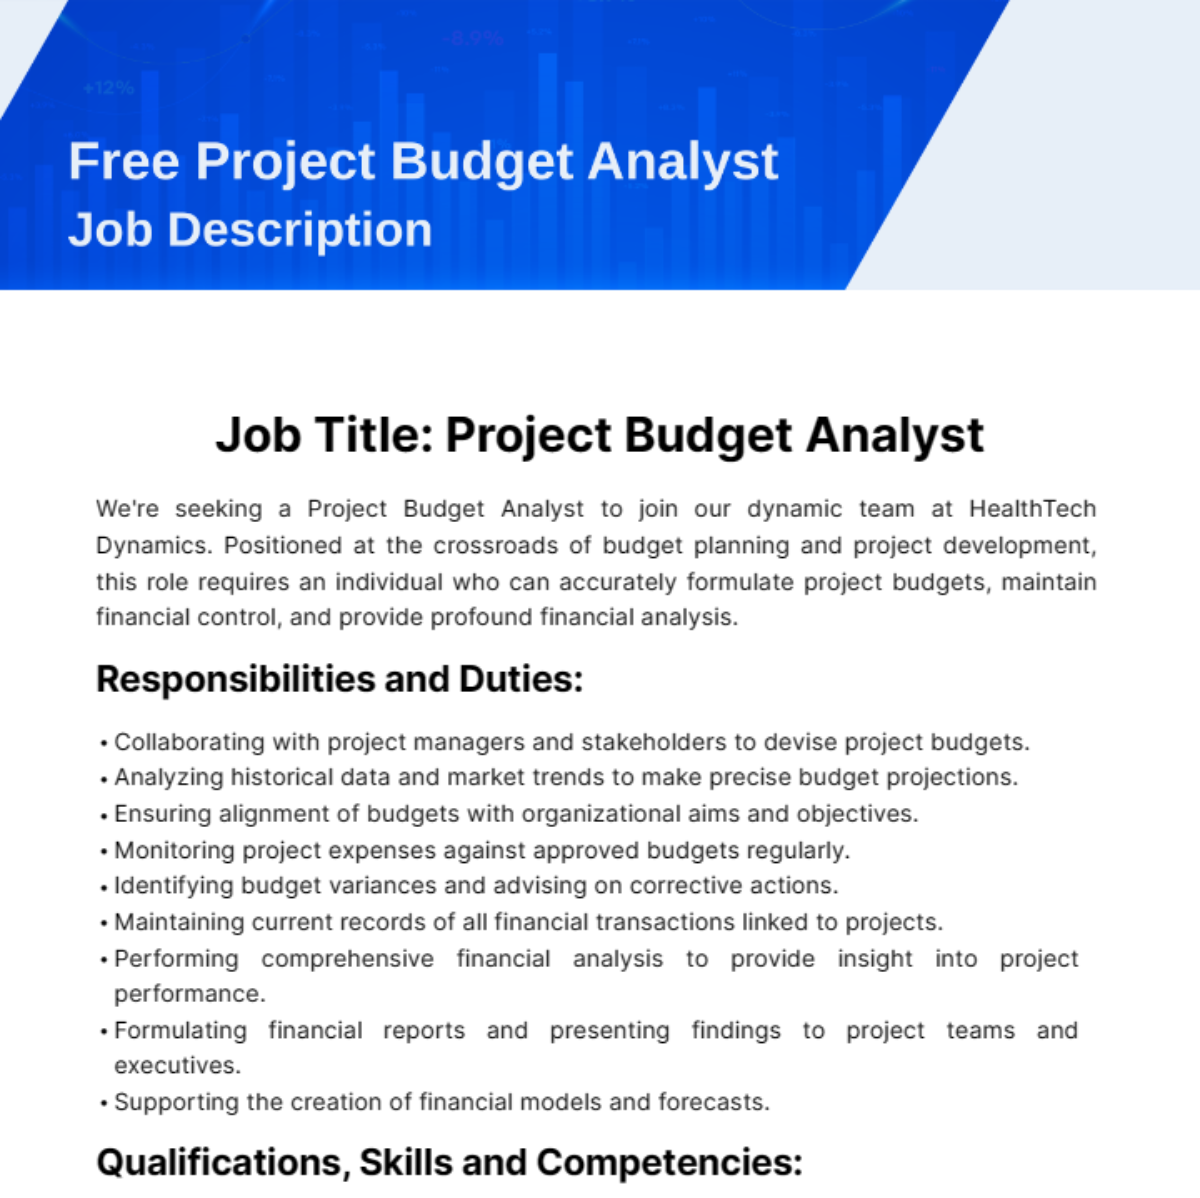 Free Project Budget Analyst Job Description Template